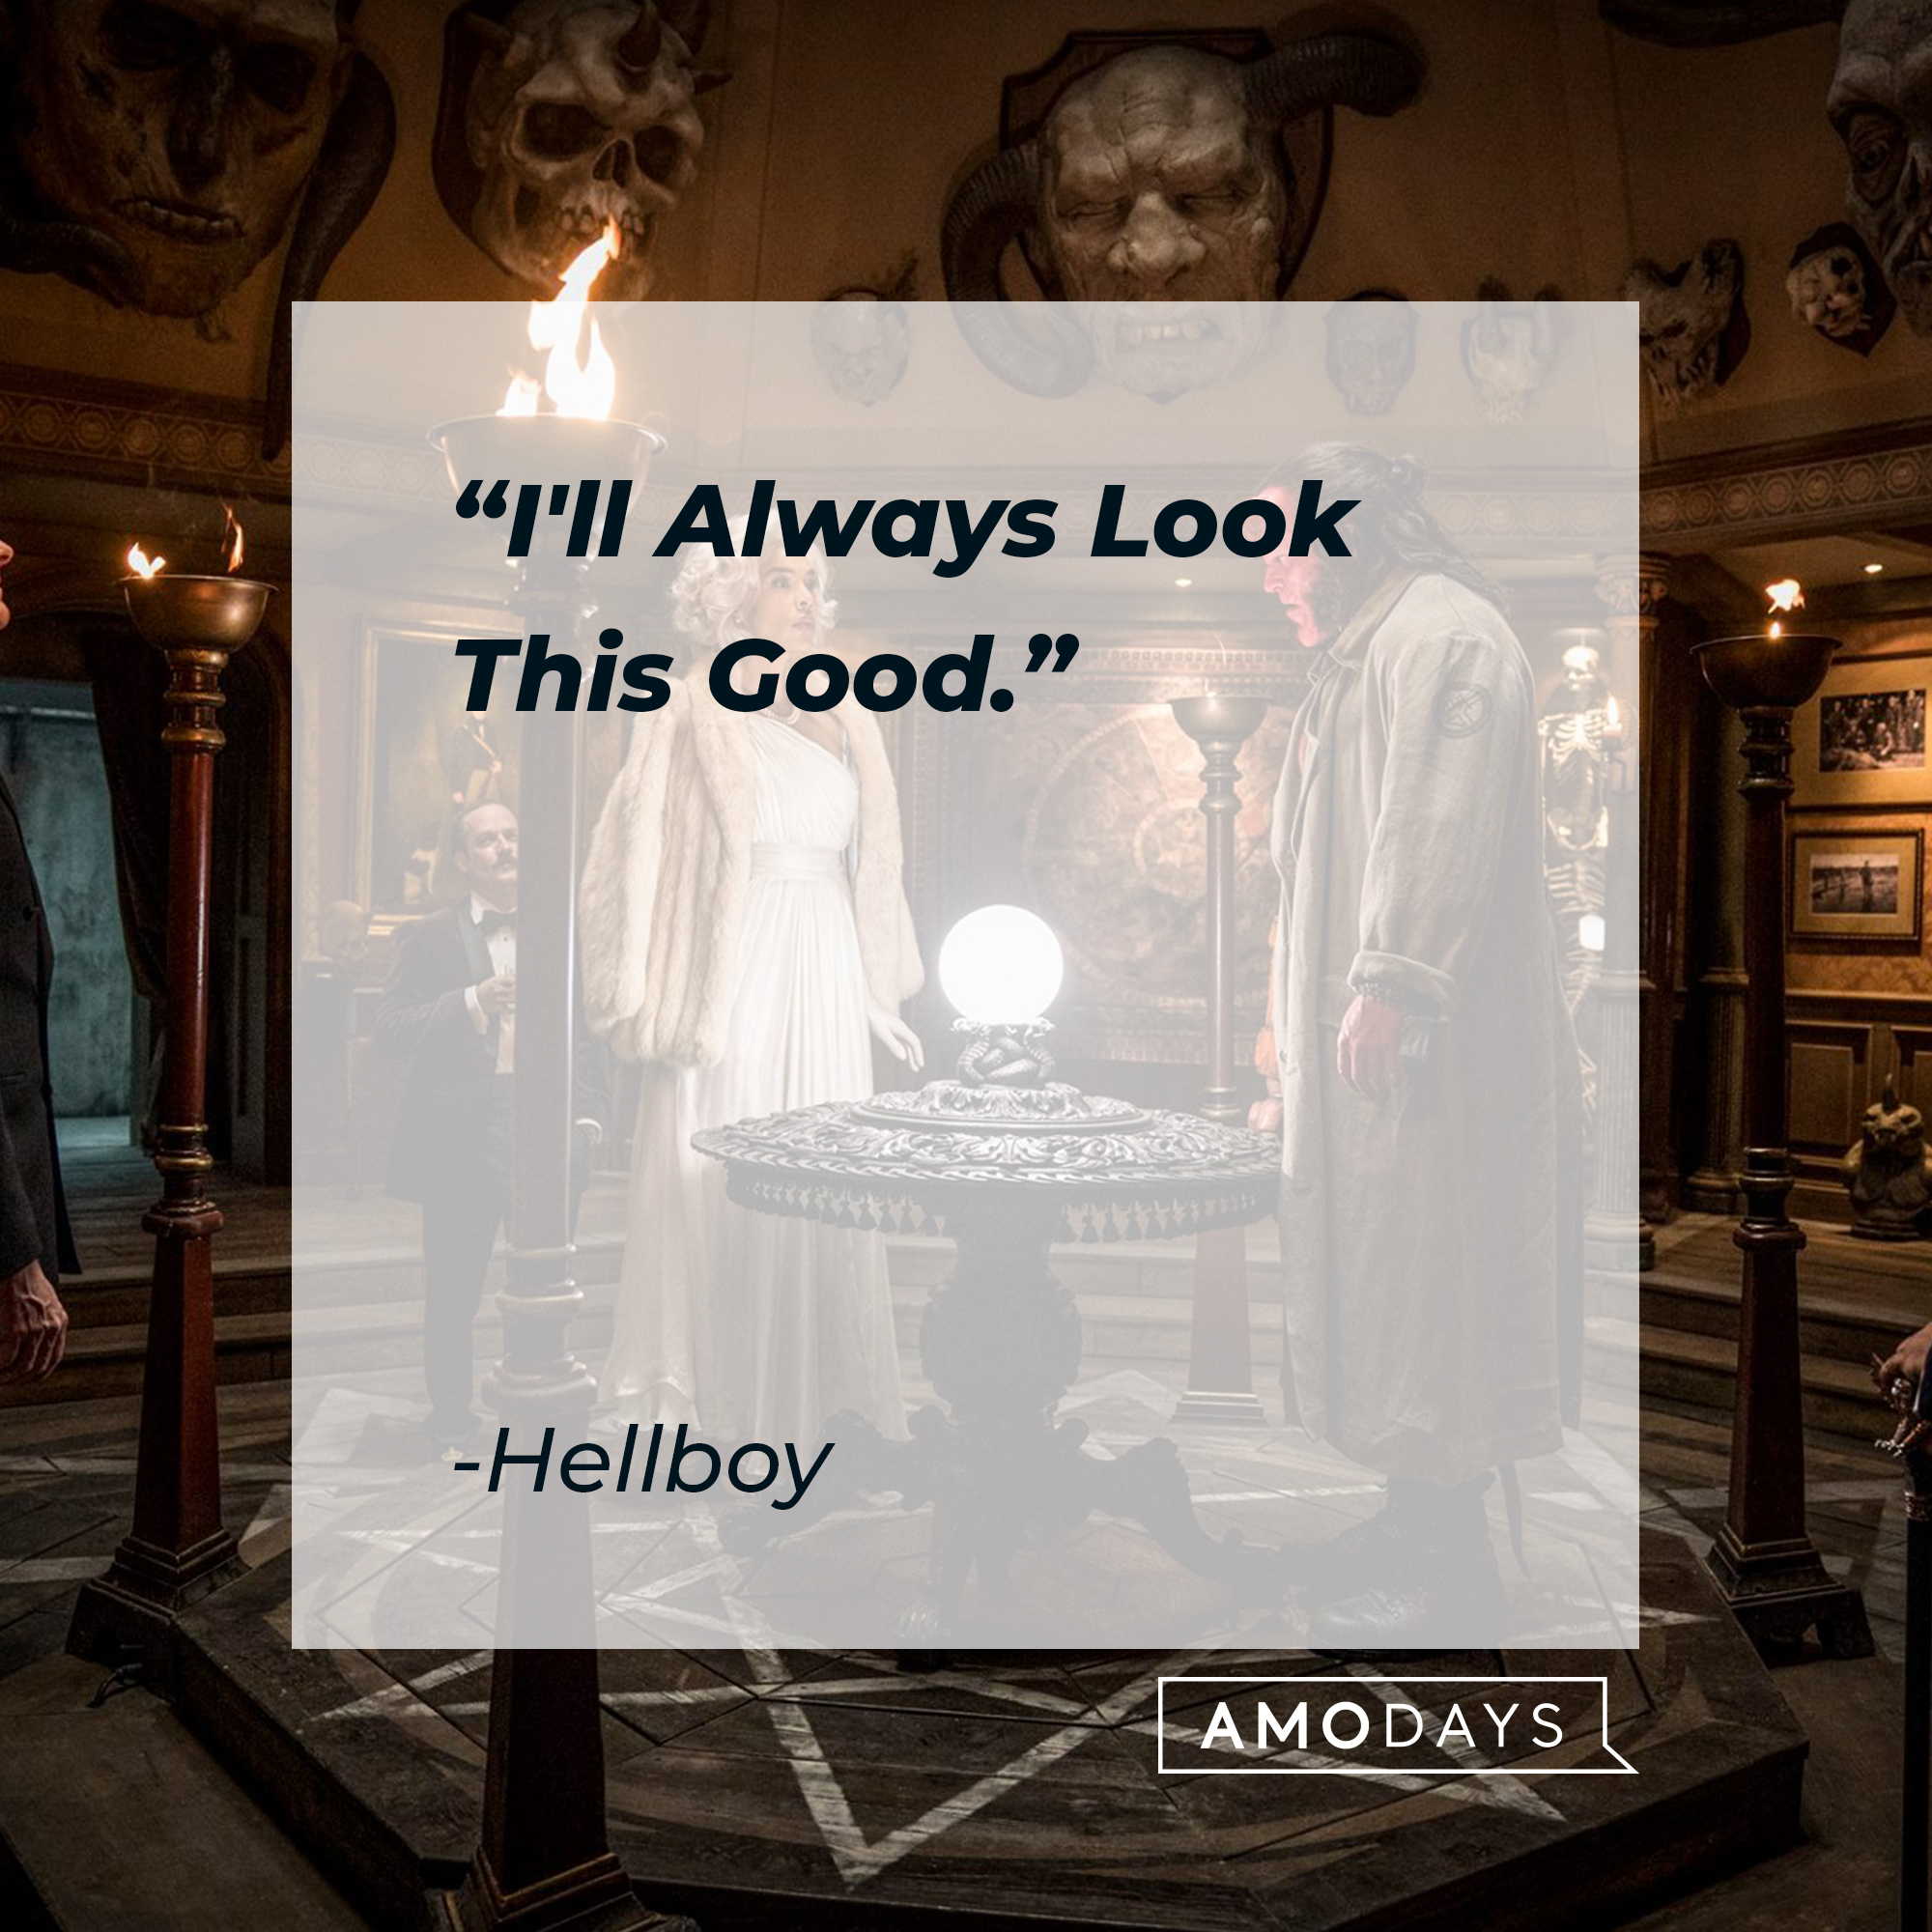 Hellboy's quote: "I'll Always Look This Good." | Source: facebook.com/hellboymovie